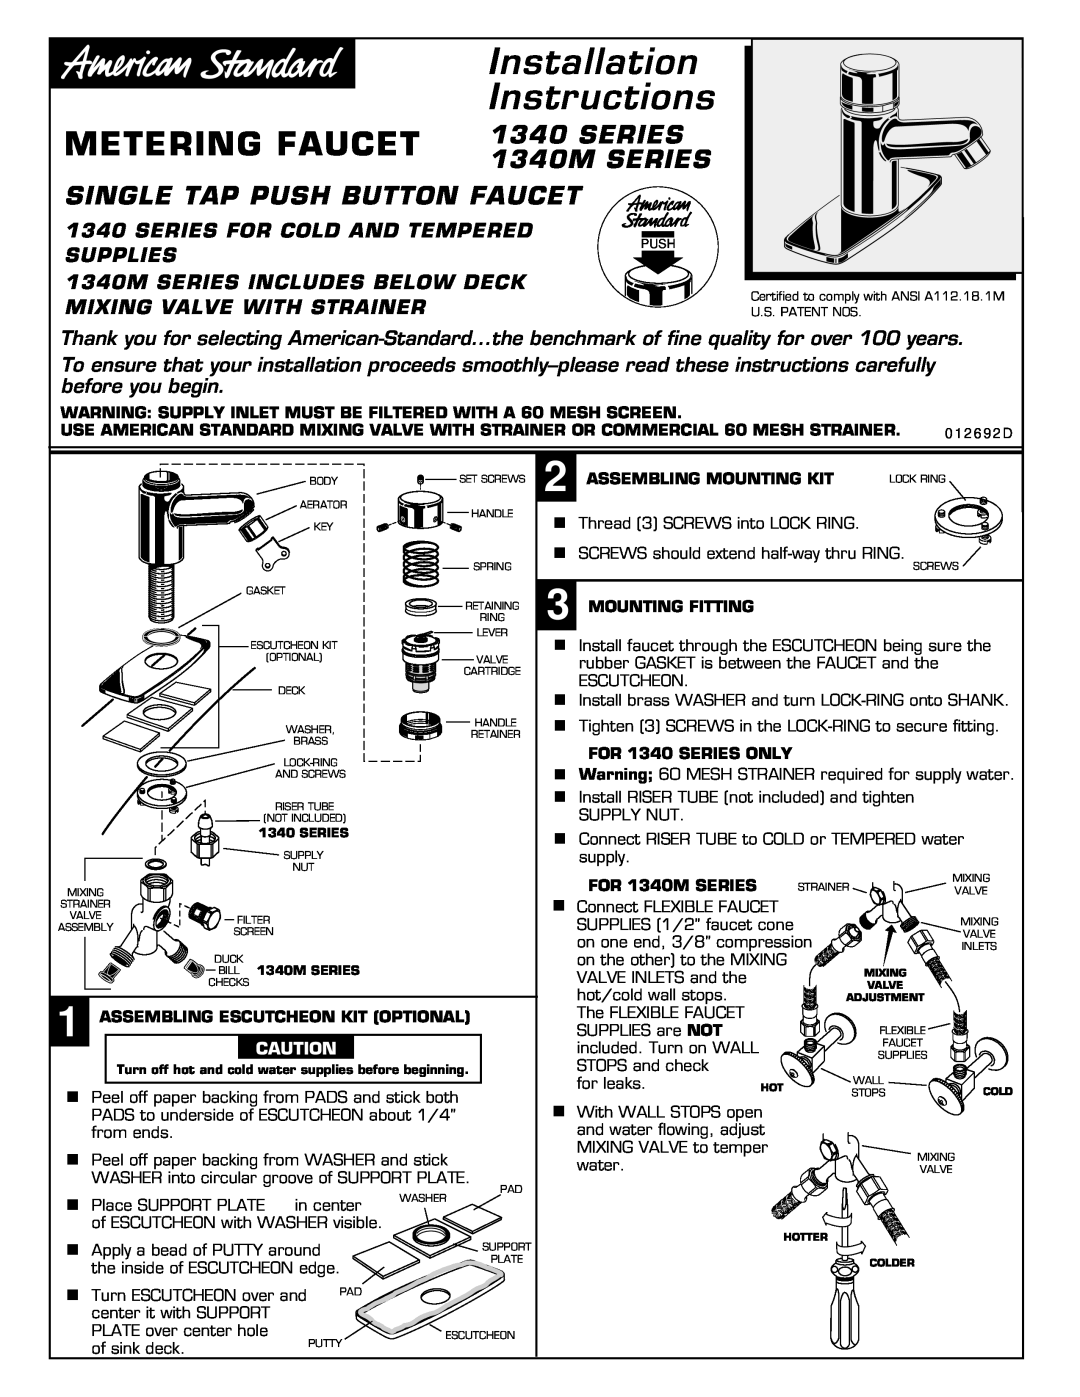 American Standard 1340M Series installation instructions Installation Instructions, Metering Faucet, SERIES 1340M SERIES 